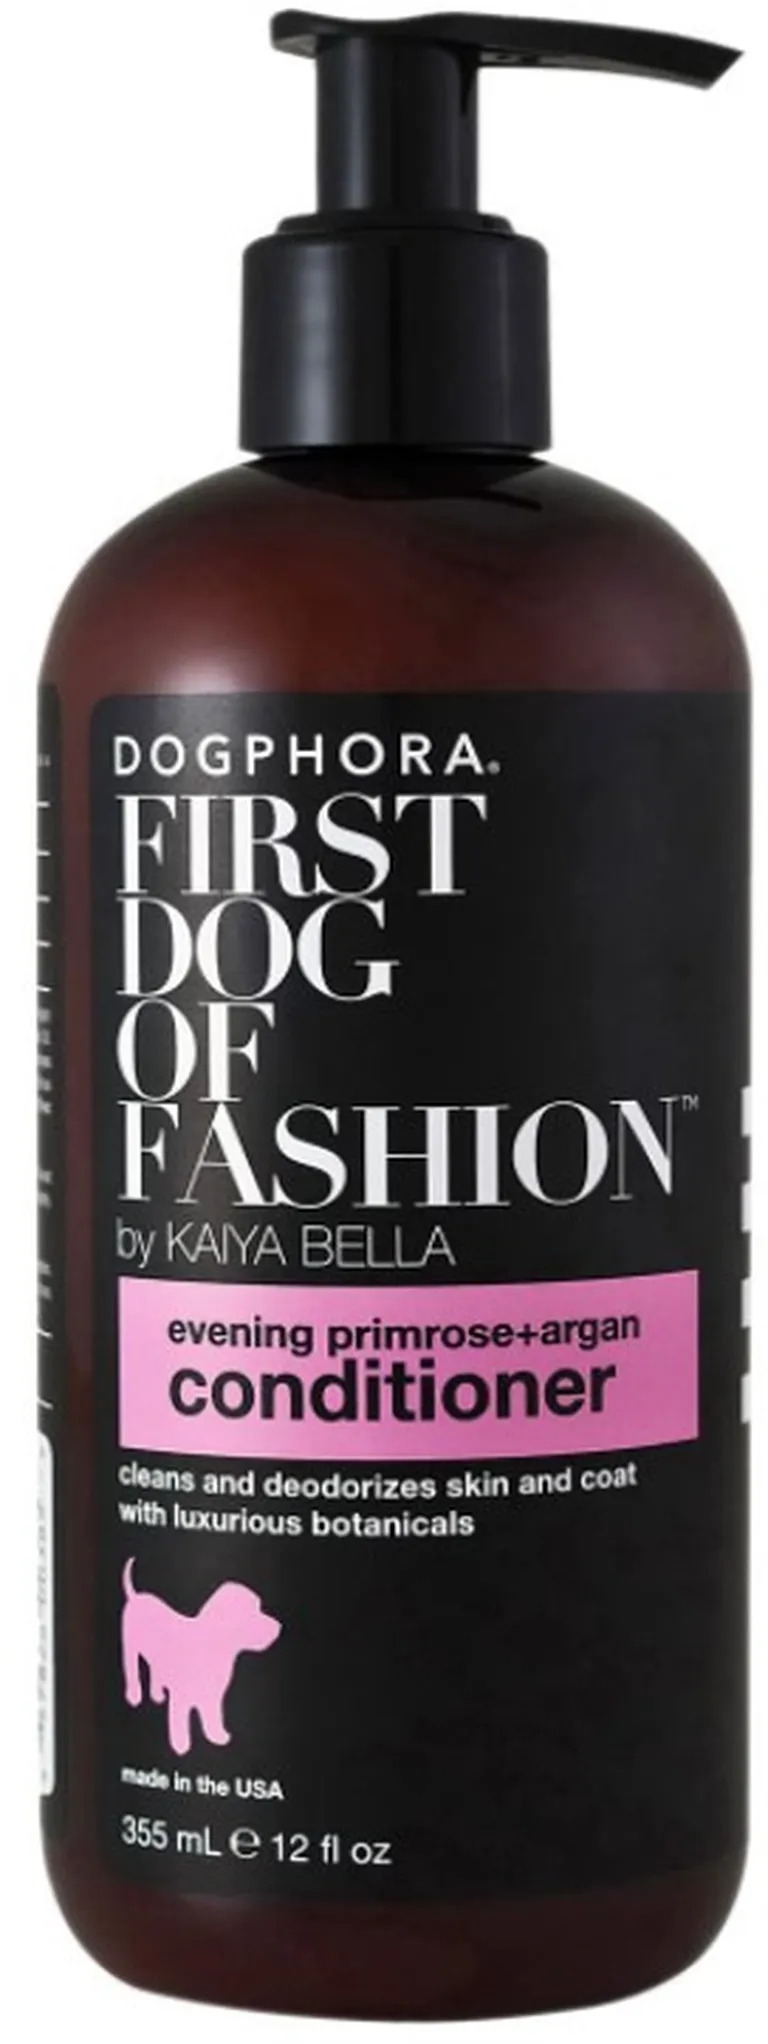 Dogphora First Dog of Fashion Conditioner Photo 1